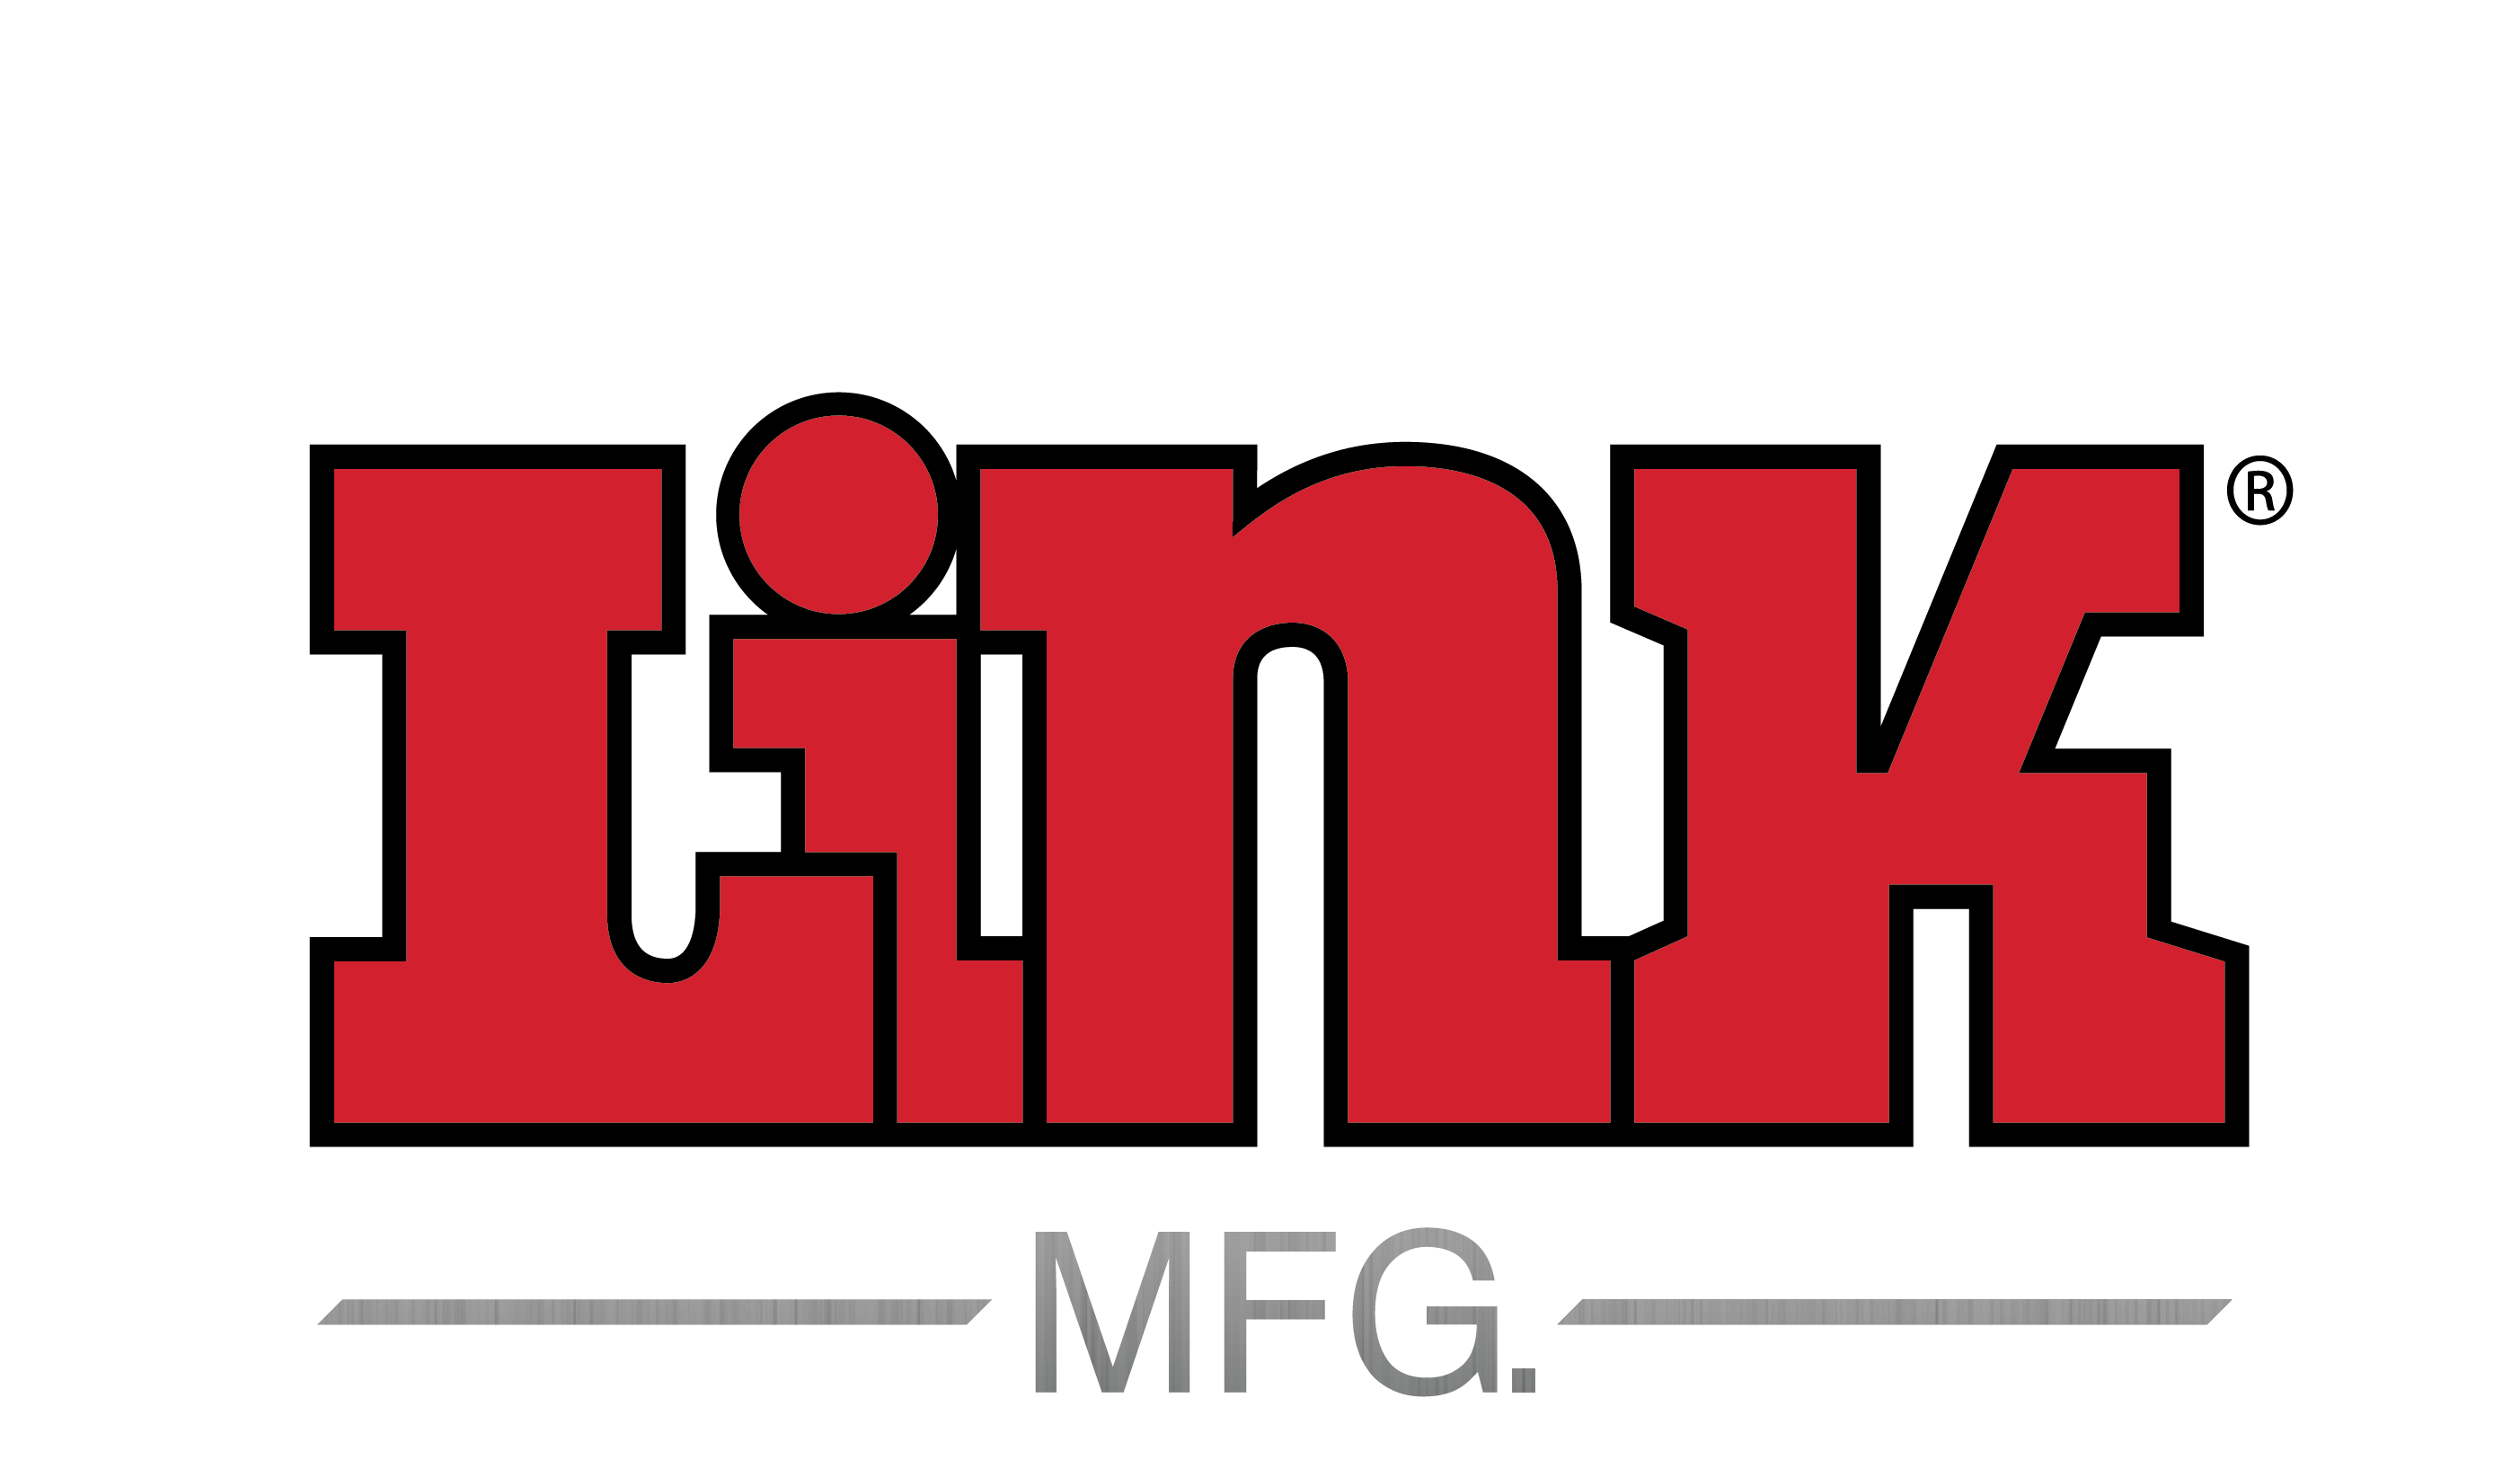 Mfg Logo - Link Logo with MFG